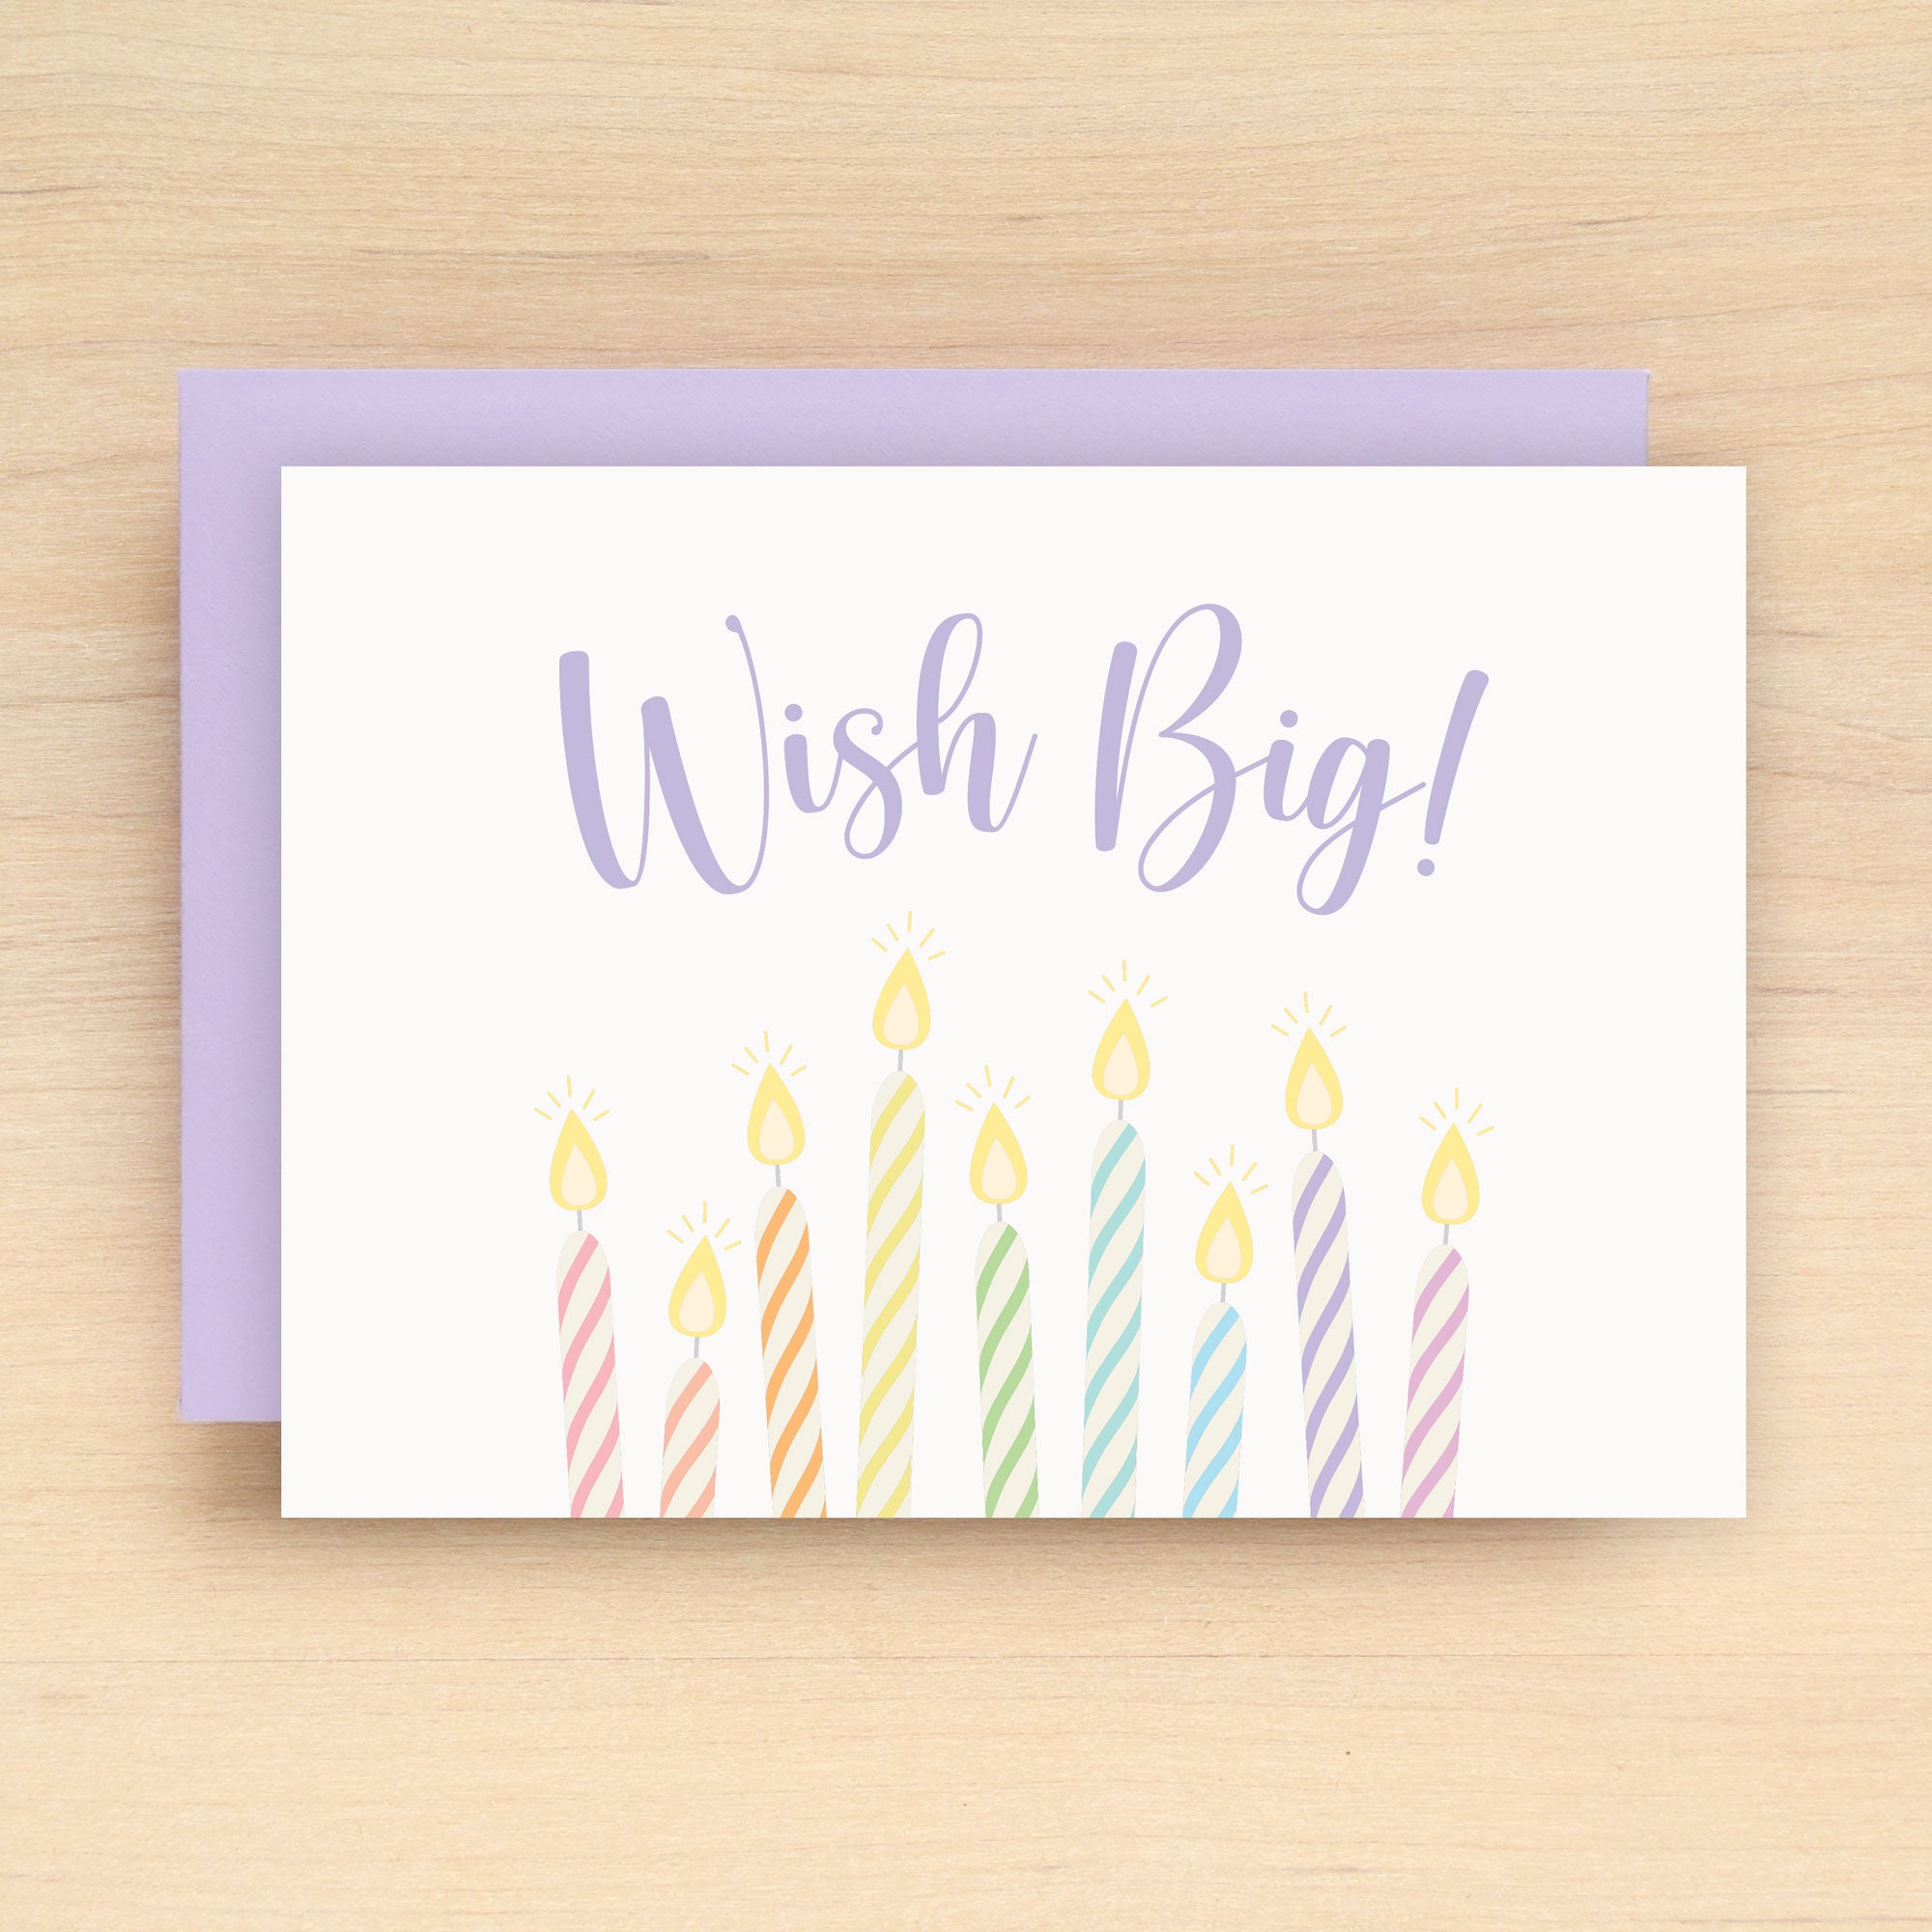 "Wish Big" Wish Big Greeting Card #262